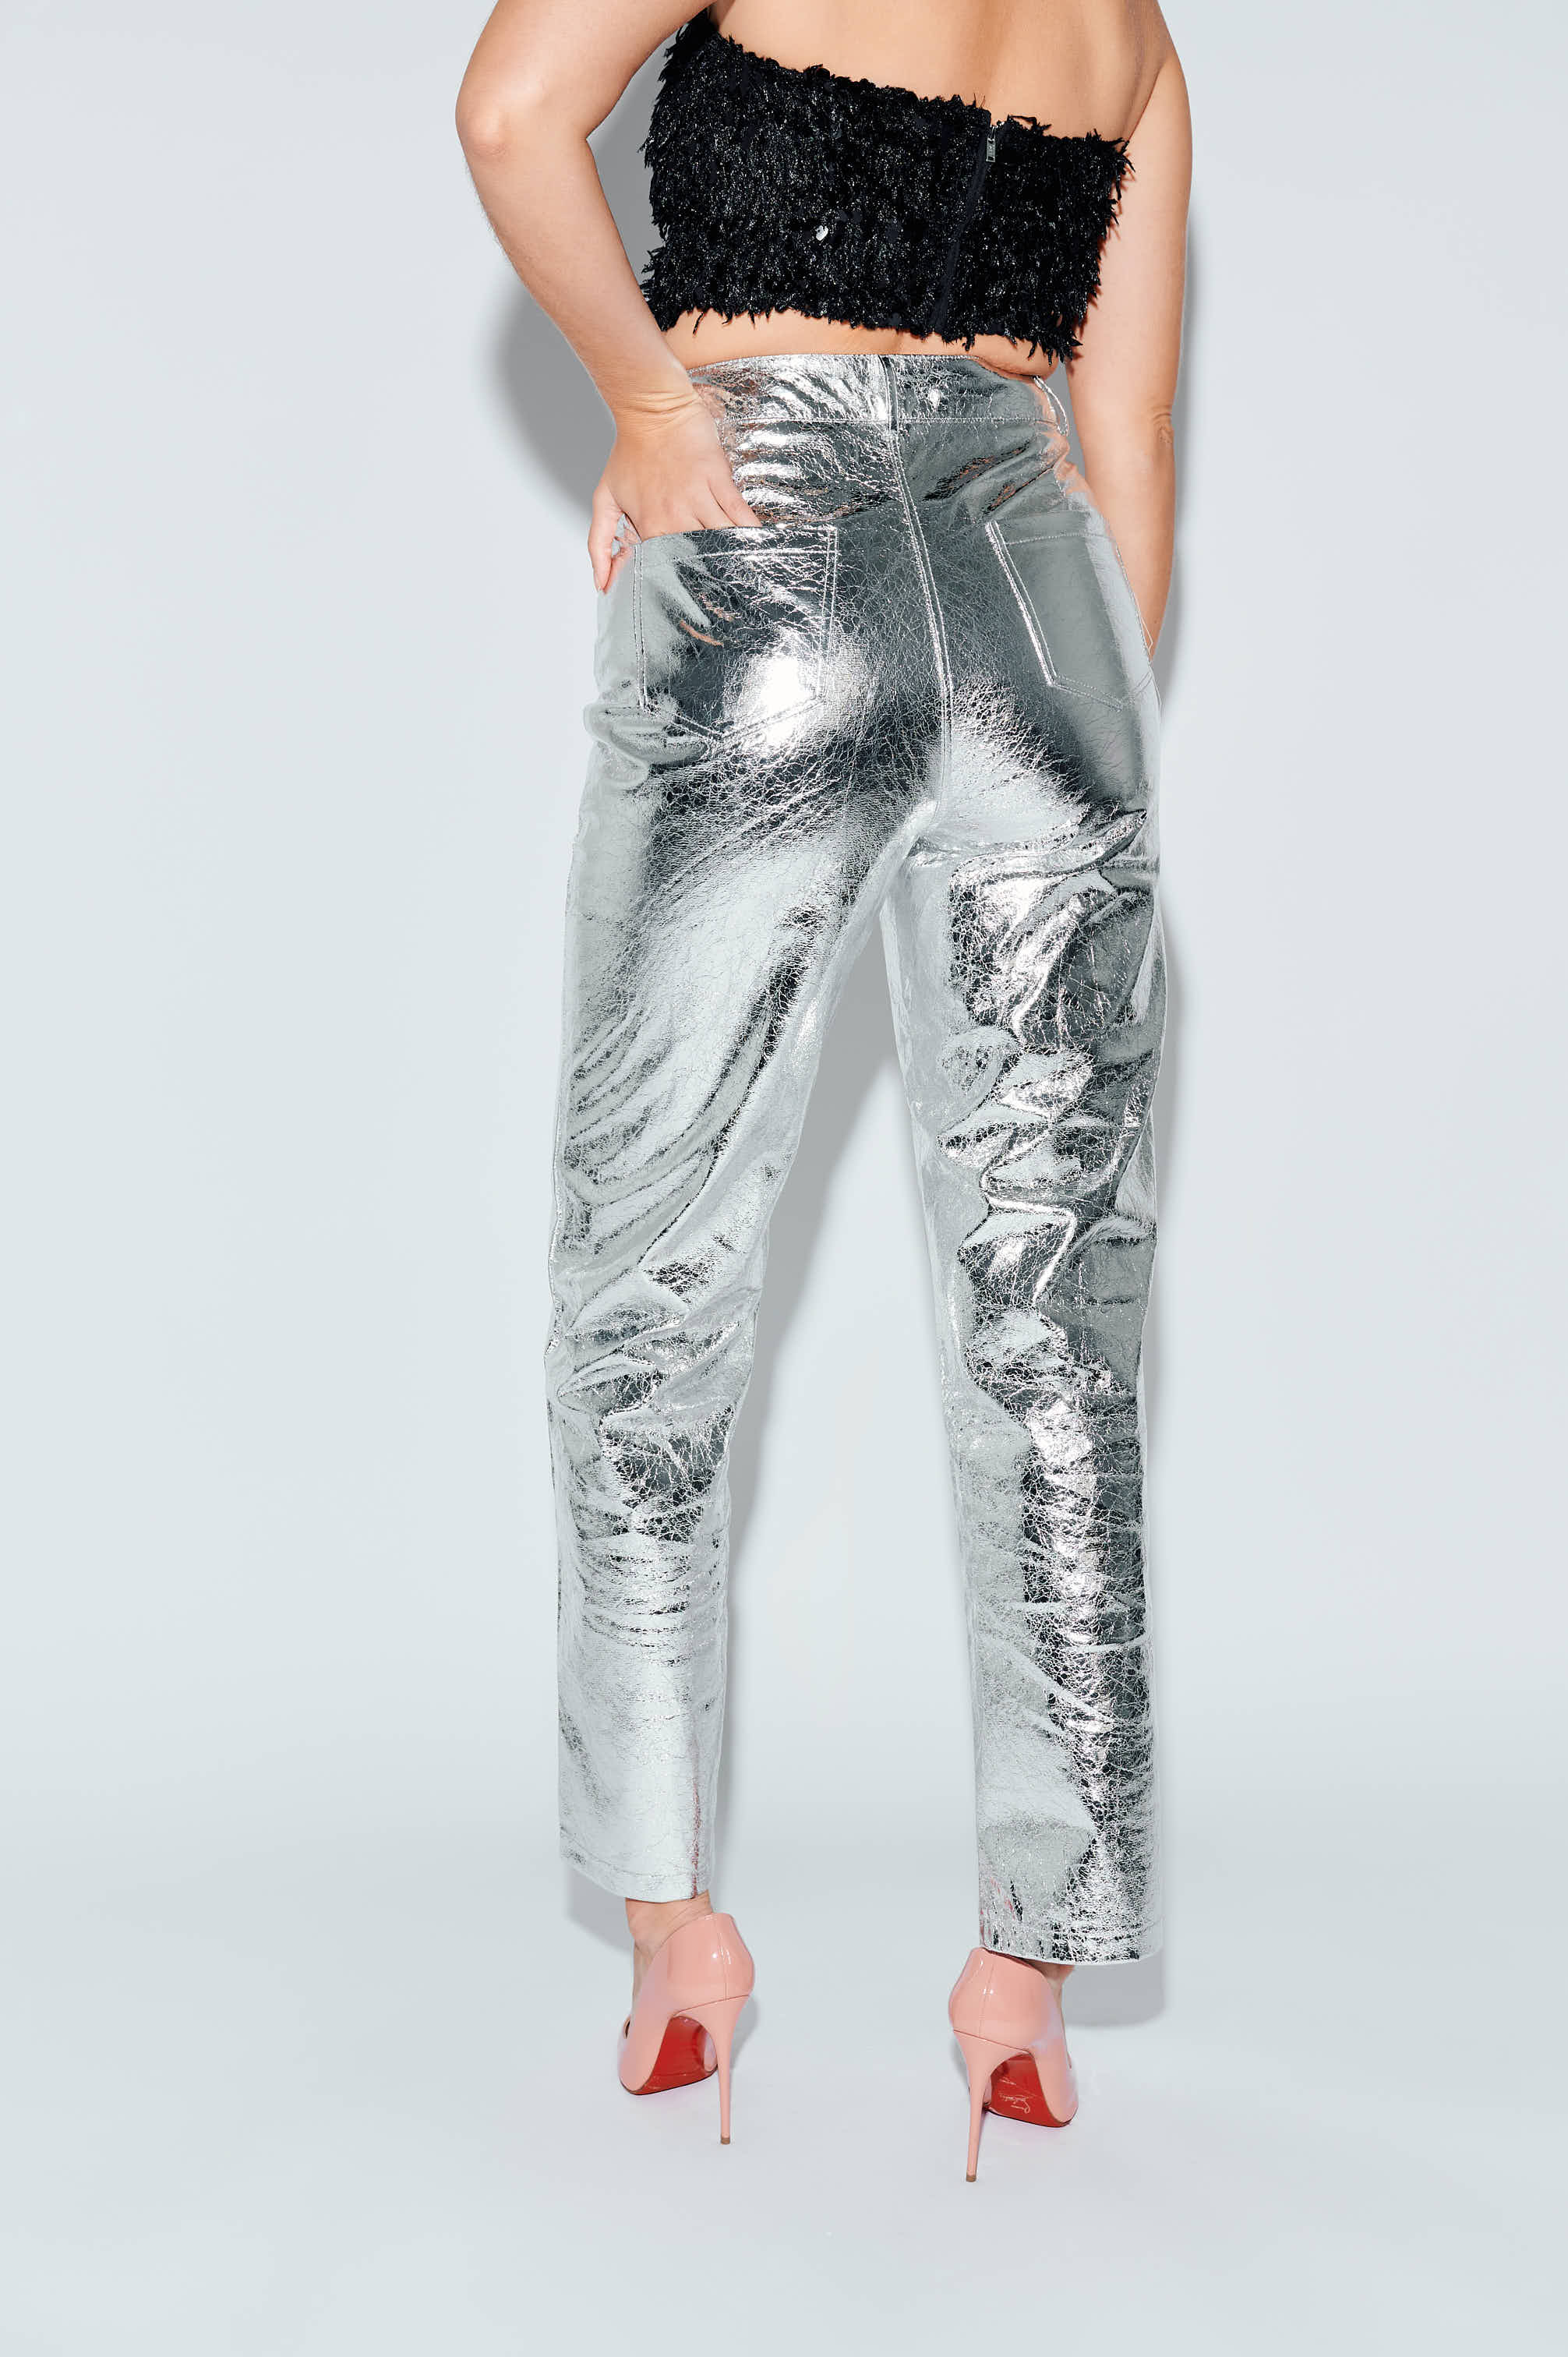 Glittery Bodysuit - Black/silver-colored - Ladies